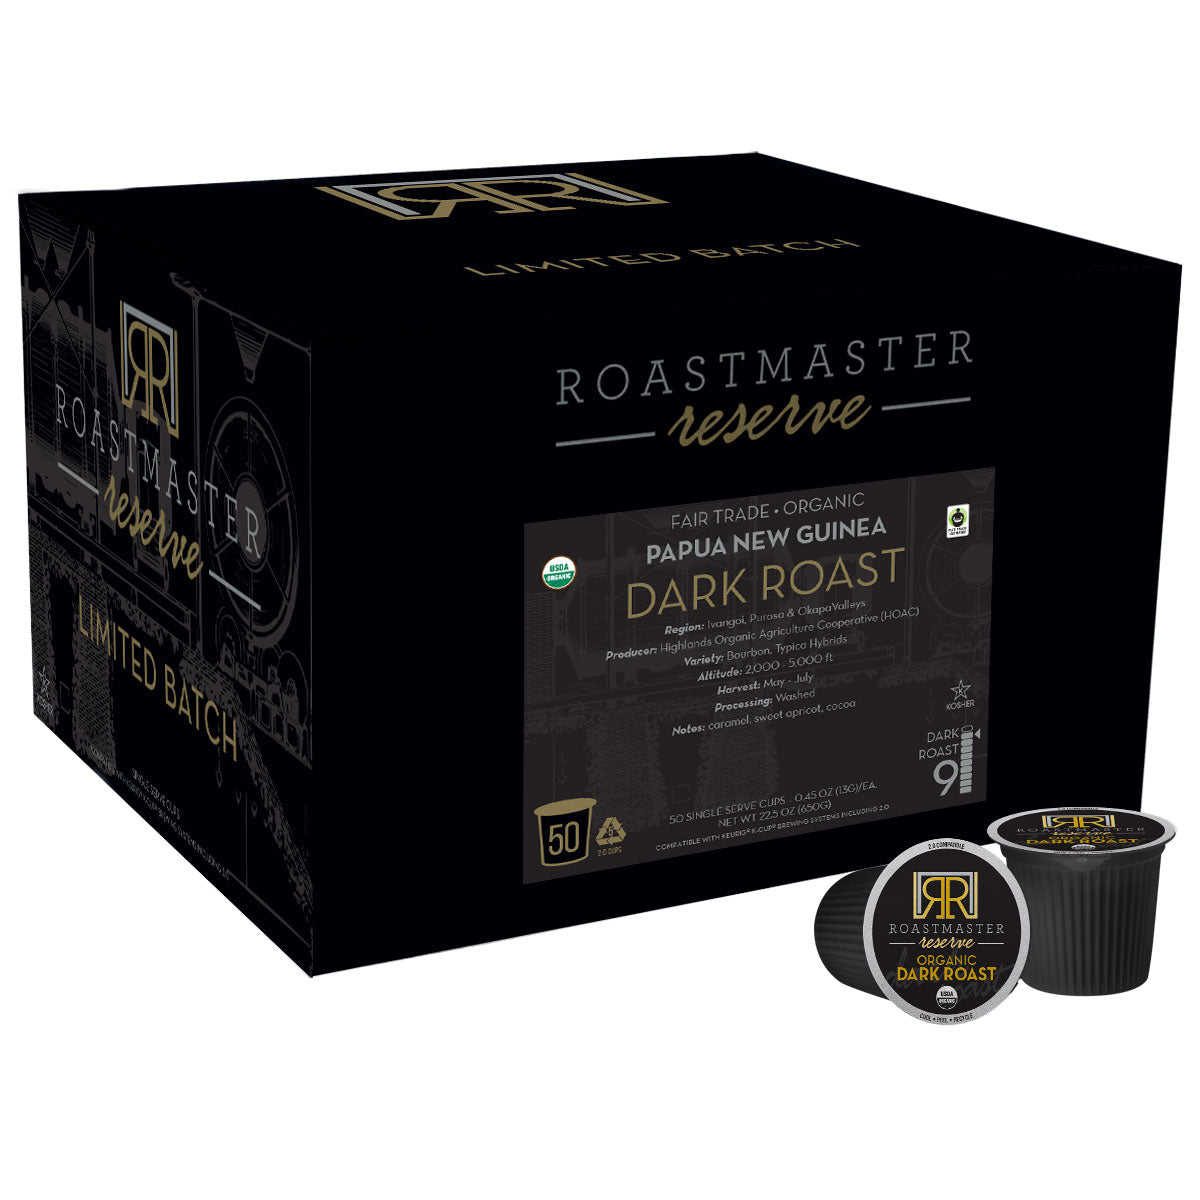 Roastmaster Reserve Organic Papua New Guinea Dark Roast Coffee Pods - 50ct